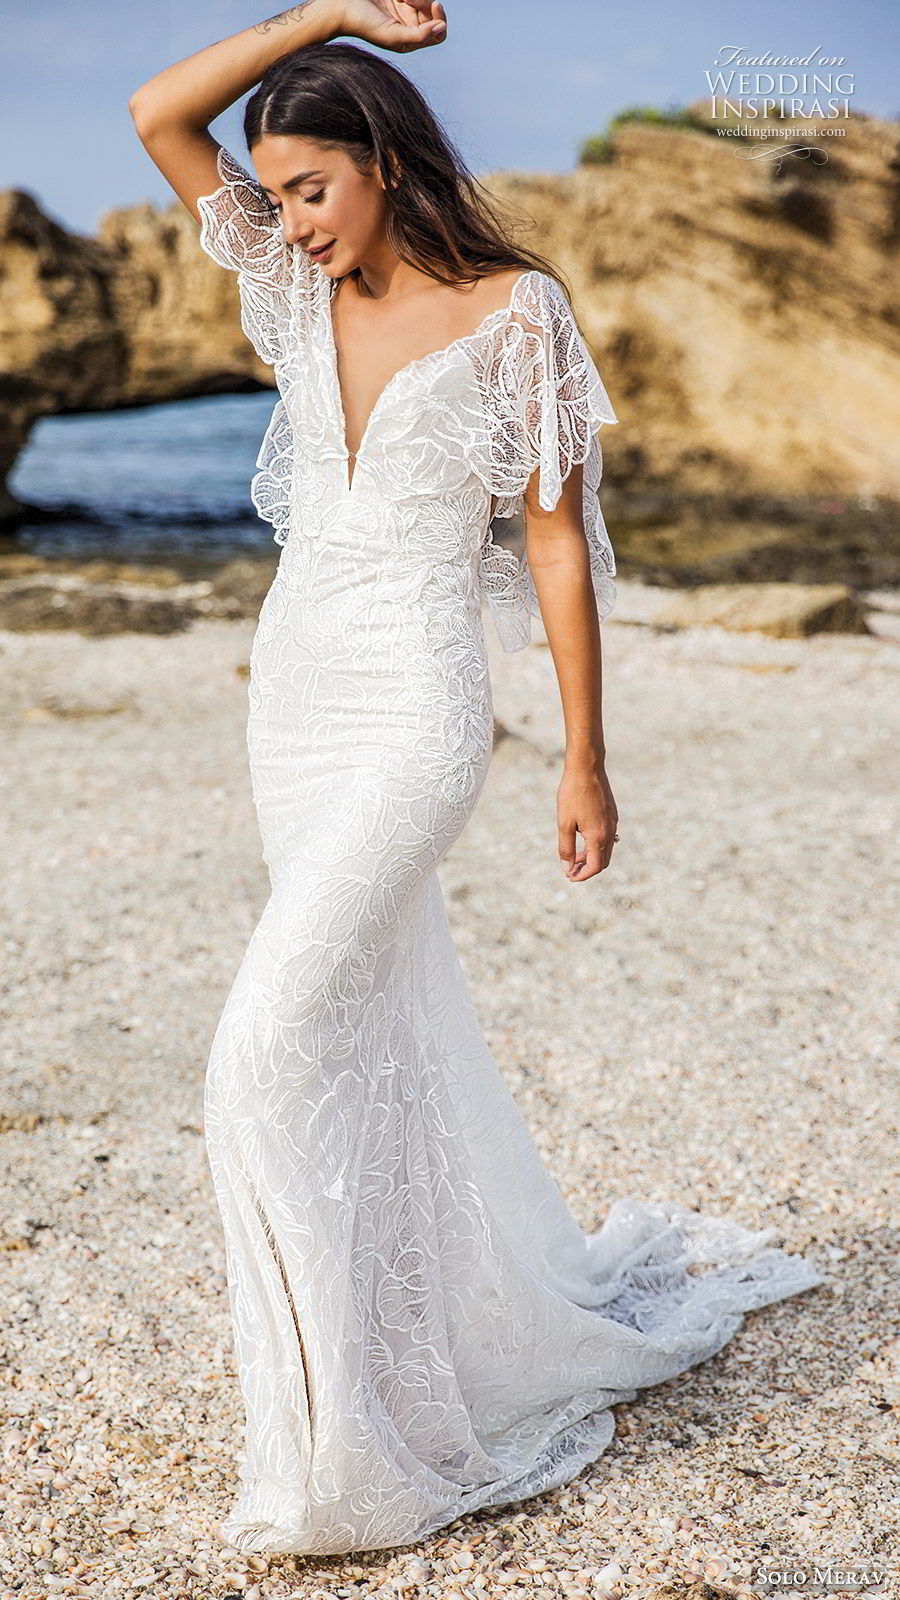 solo merav 2019 bridal flutter sleeves plunging v neckline sheath embellished lace wedding dress (2) mv sweep train bohemian romantic